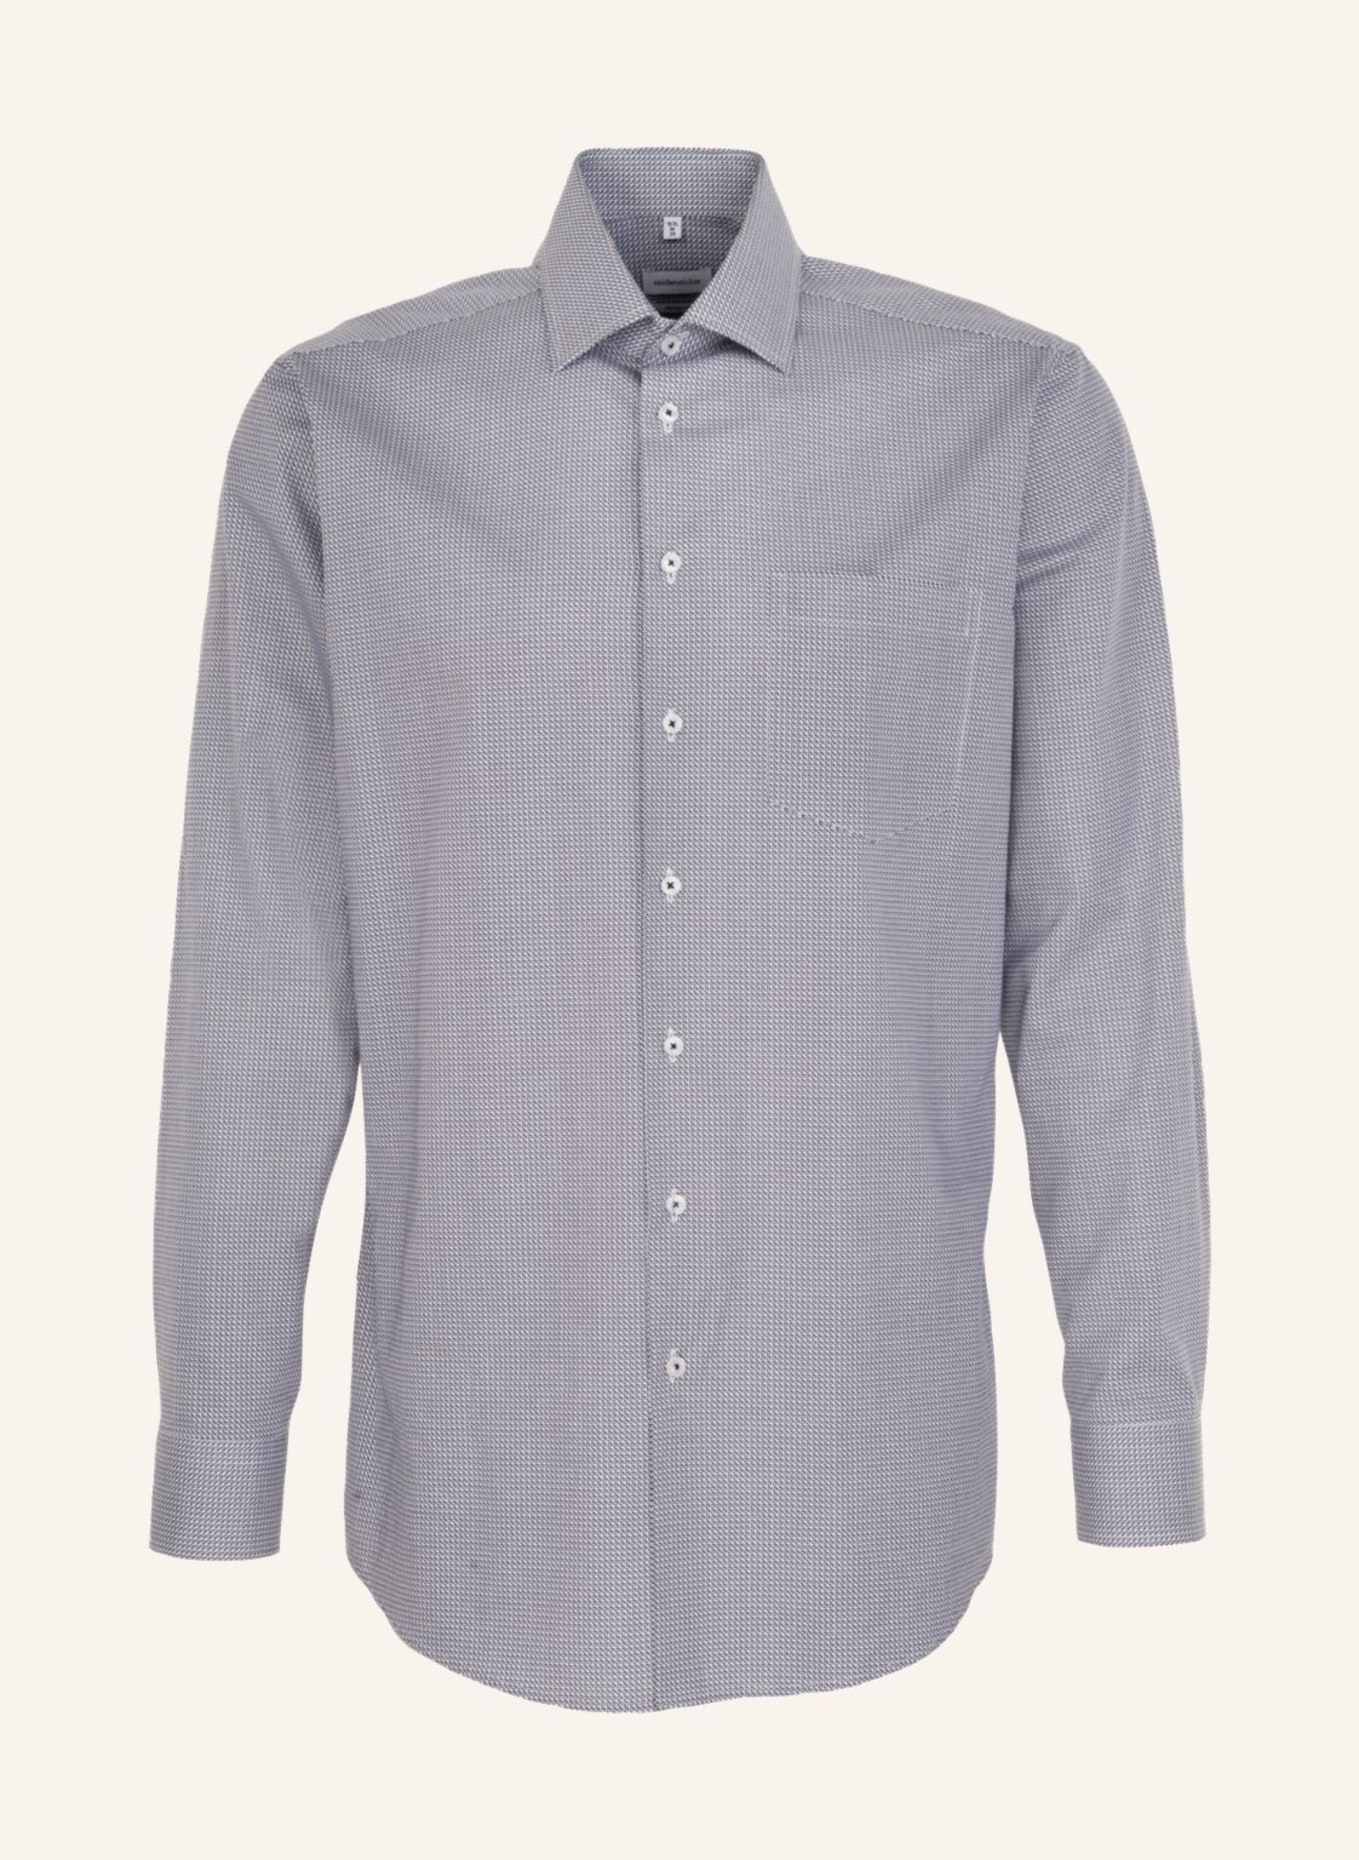 seidensticker Business Hemd Regular Fit, Farbe: BLAU (Bild 1)